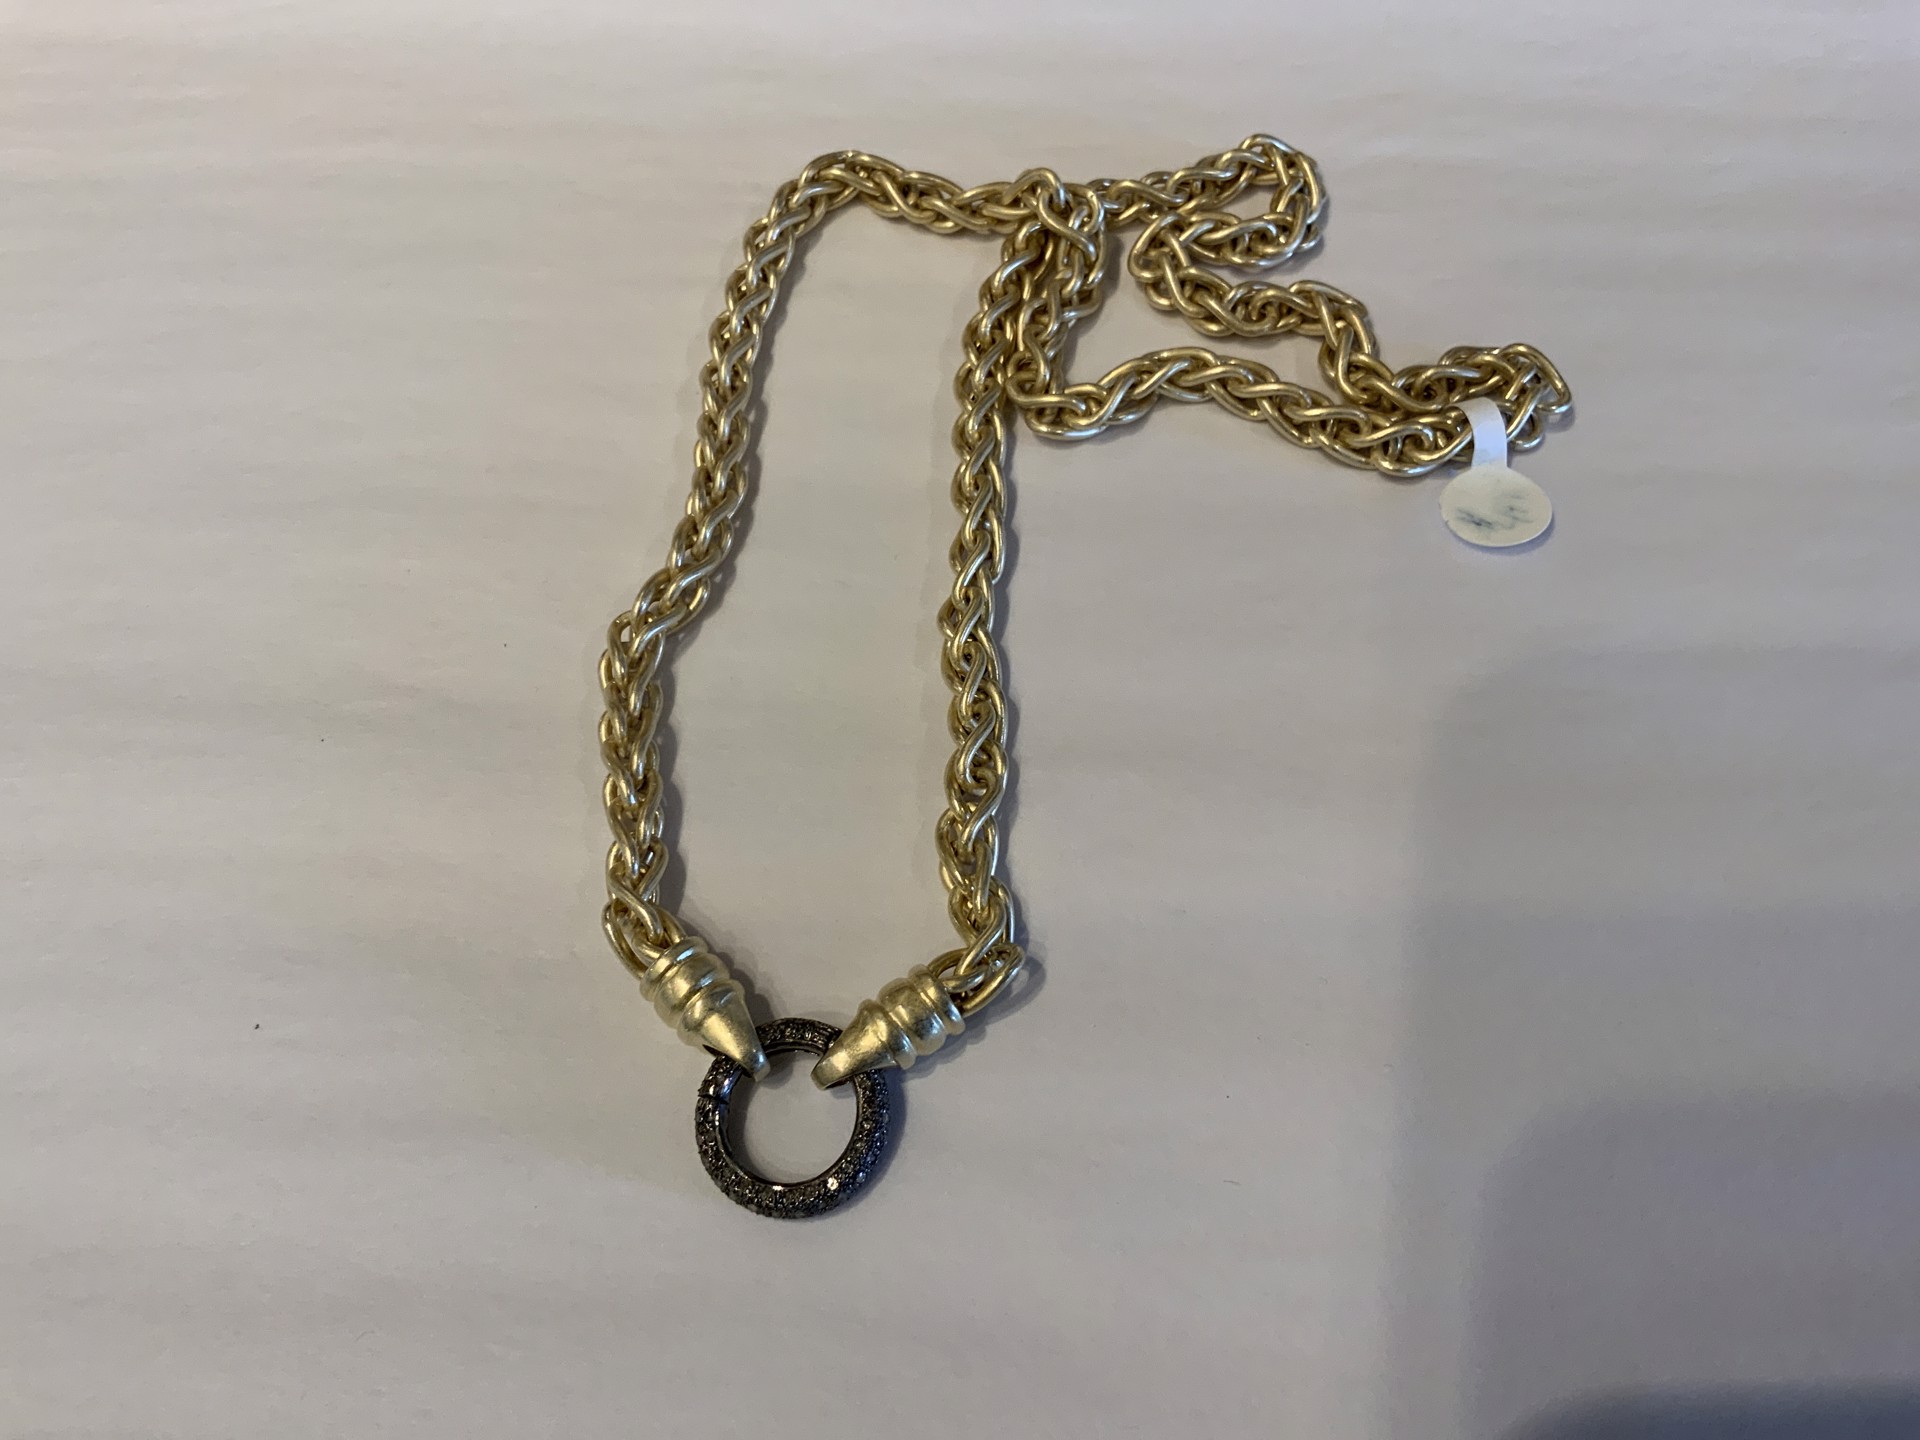 Gold Vermeil Chain and Pave Diamond Loop Pendant Necklace by Karen Birchmier